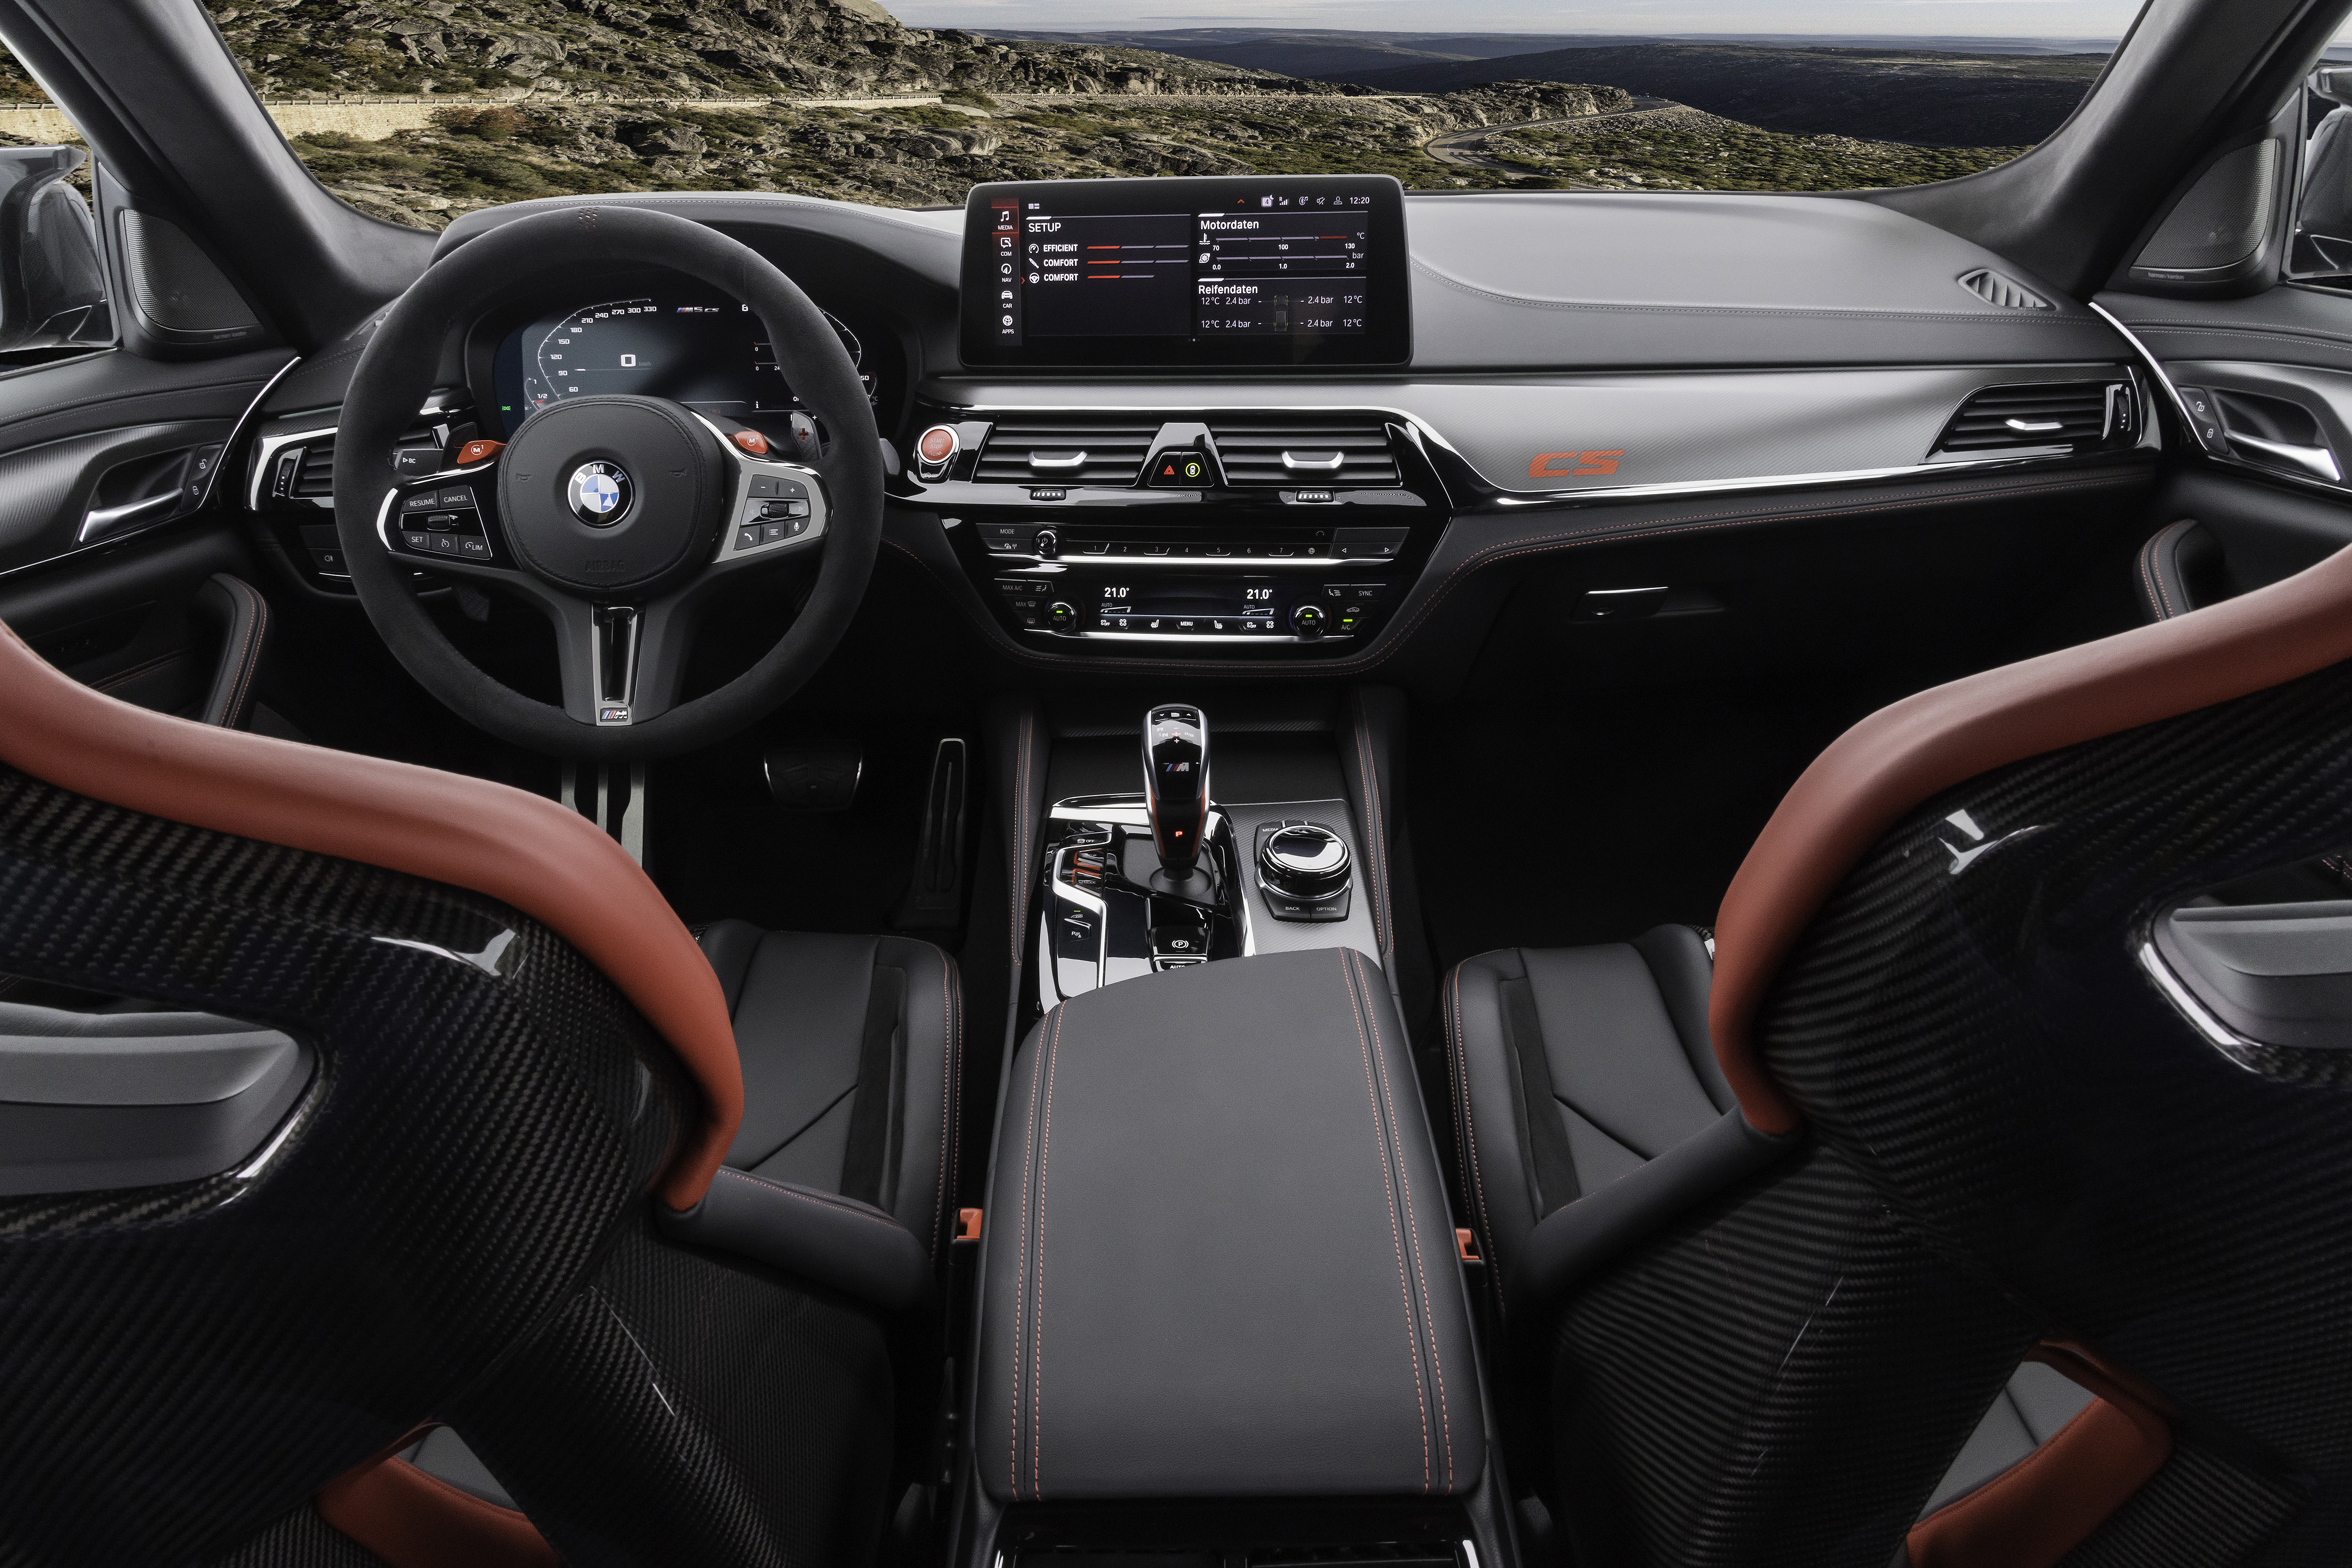 BMW M5 CS 22 interior.jpg